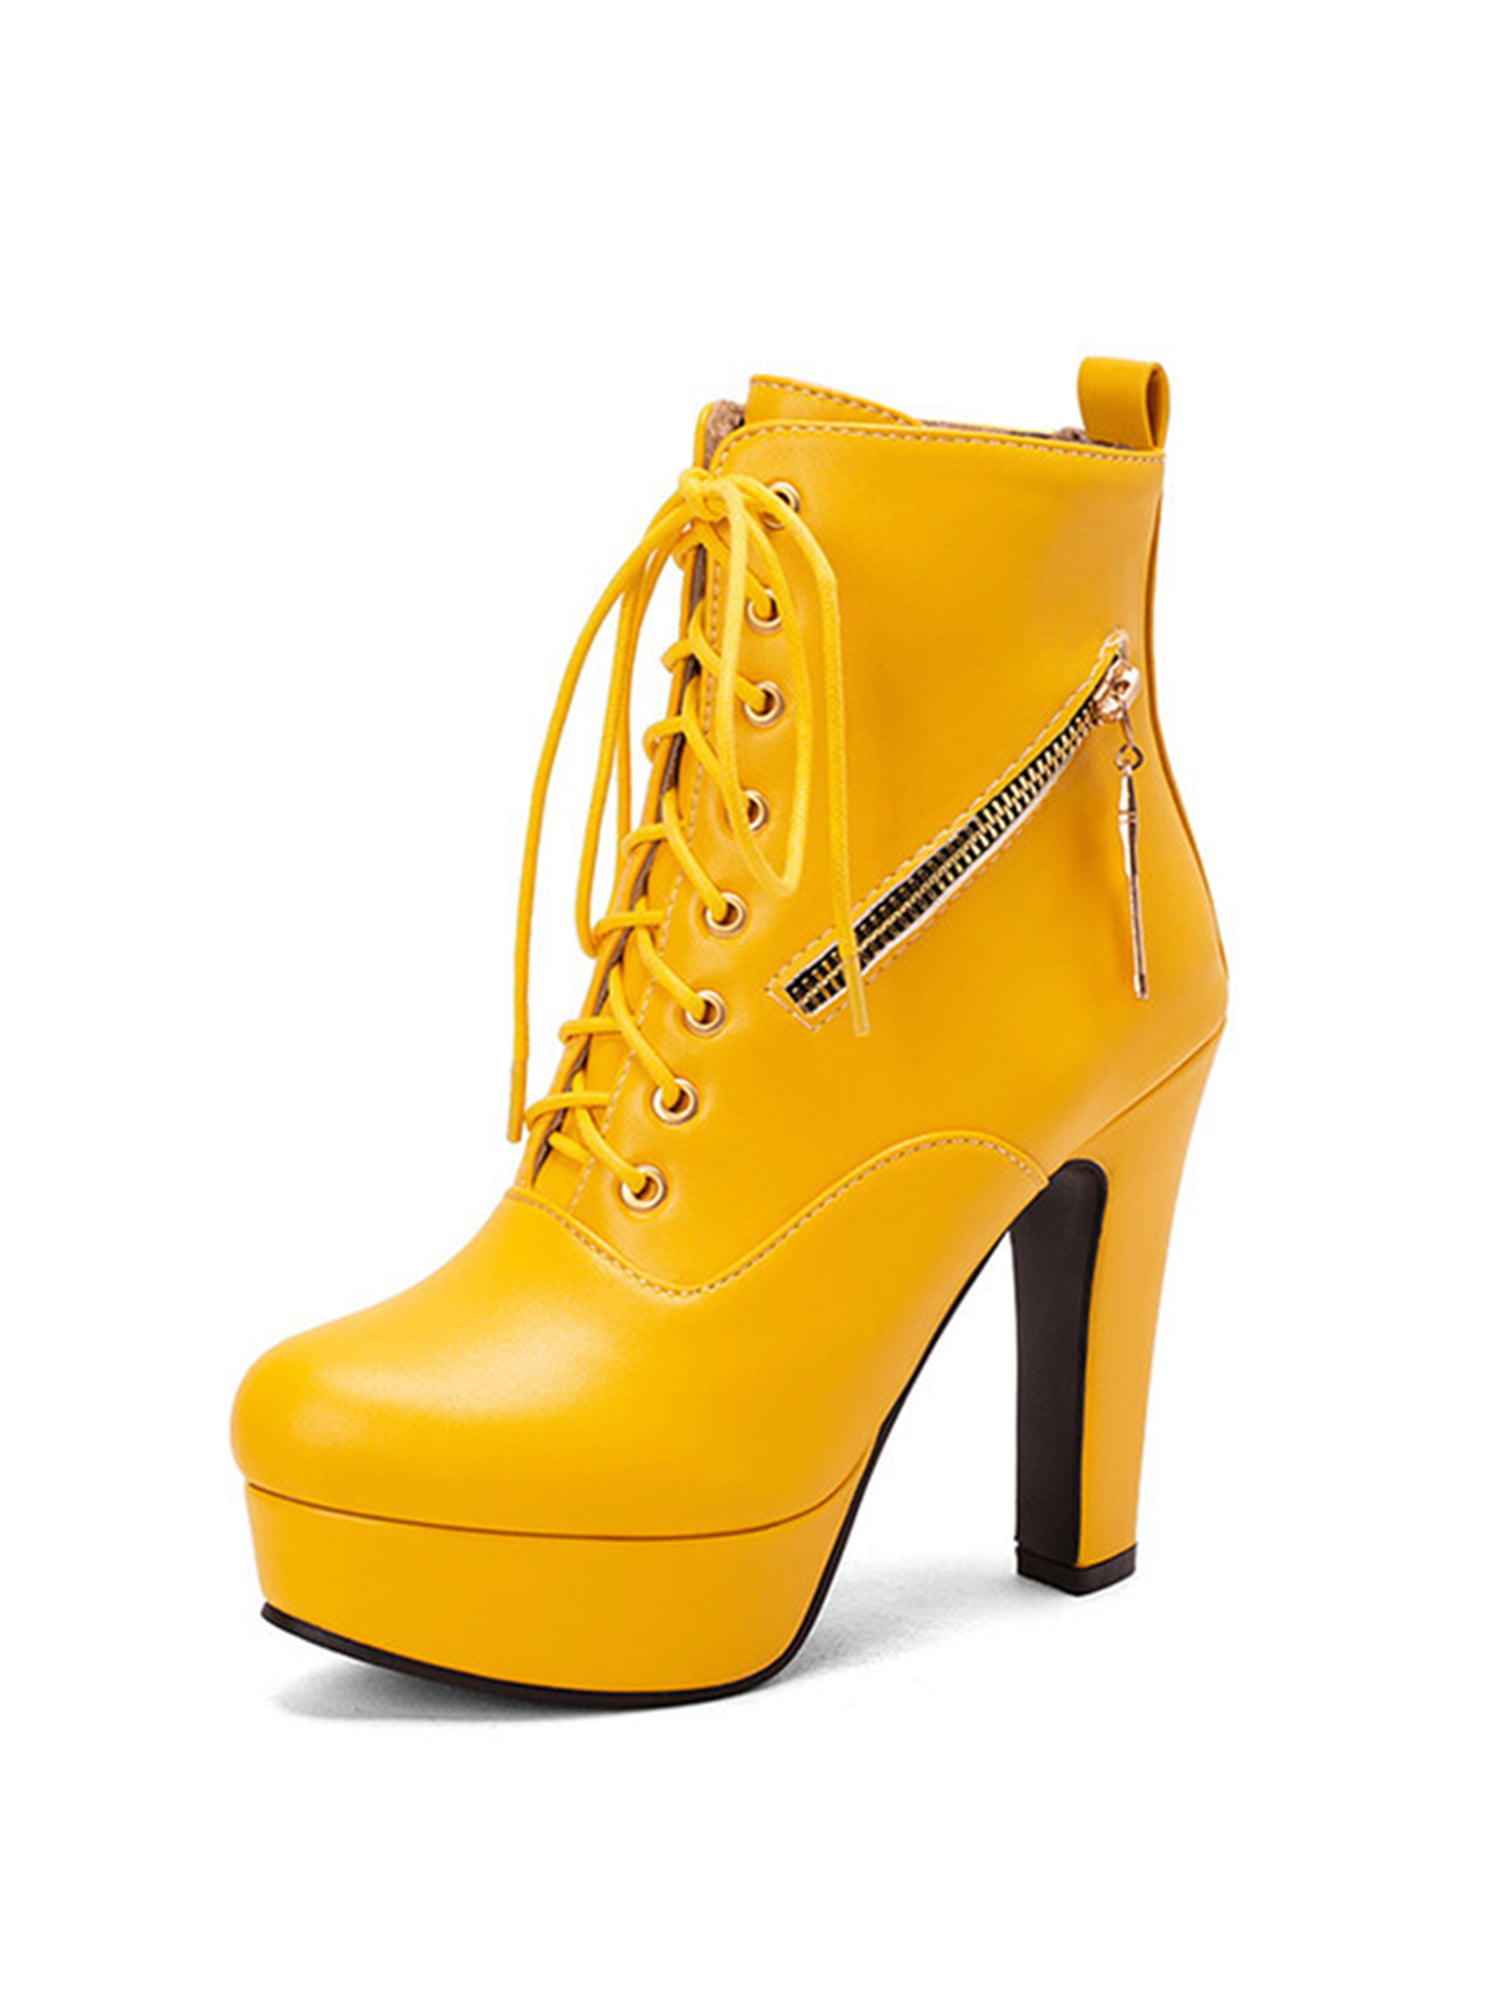 Pour La Victoire Women's Rickie Brocade High Heel Ankle Bootie Steel Grey  Size 9 | Ankle booties heels, Heeled booties, Ankle booties